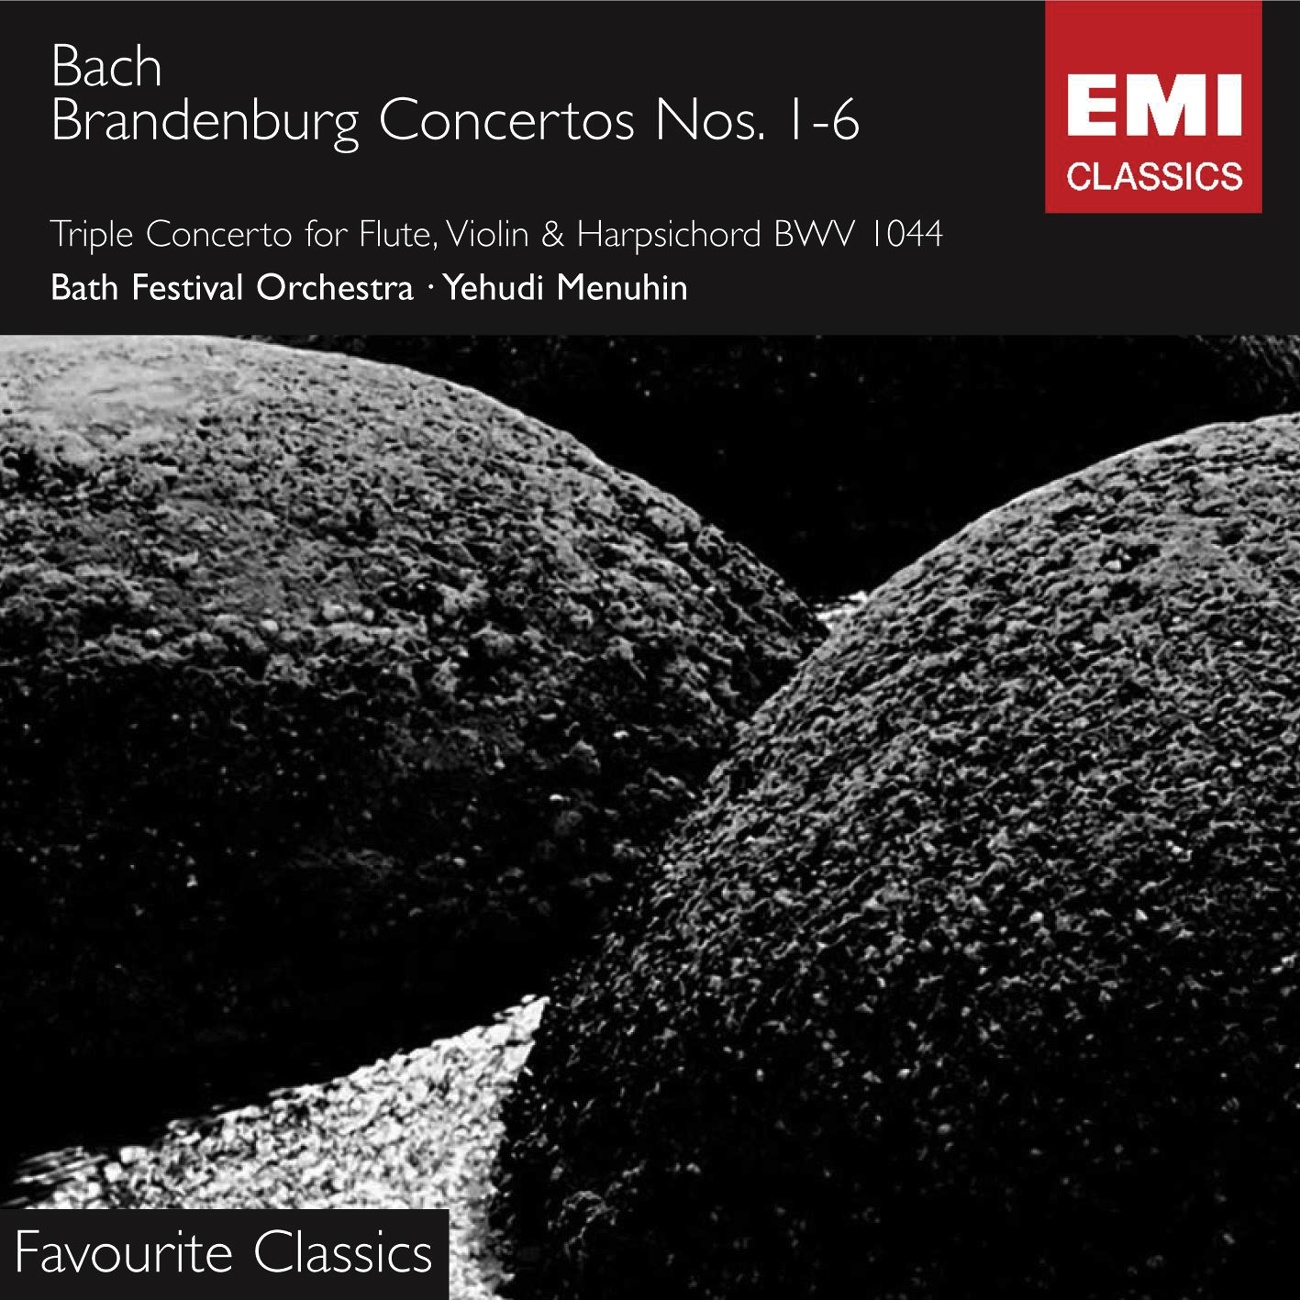 Brandenburg Concerto No. 3 in G BWV1048 (1988 Digital Remaster): I.    [Allegro]